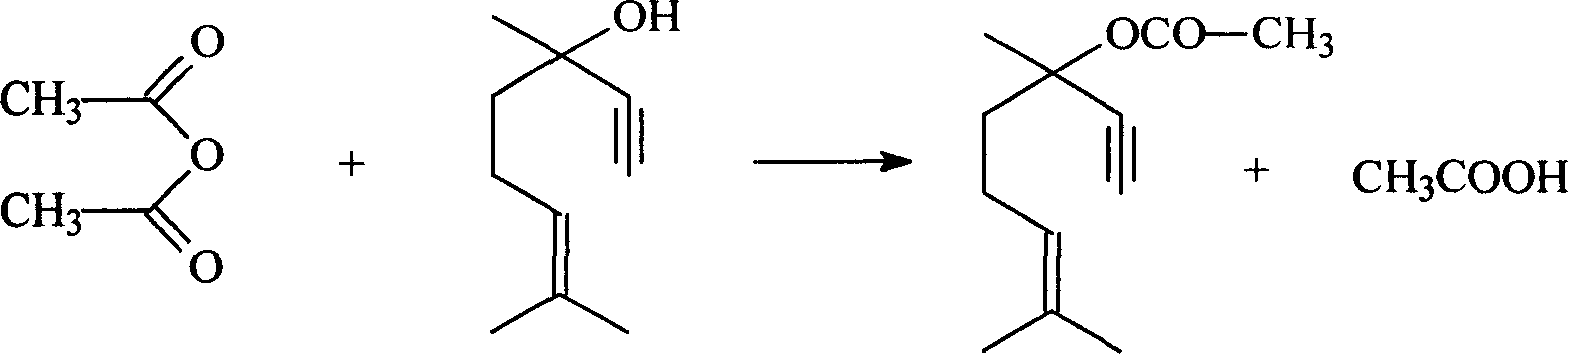 Method for preparing dehydrolinalyl acetate from dehydrolinalool